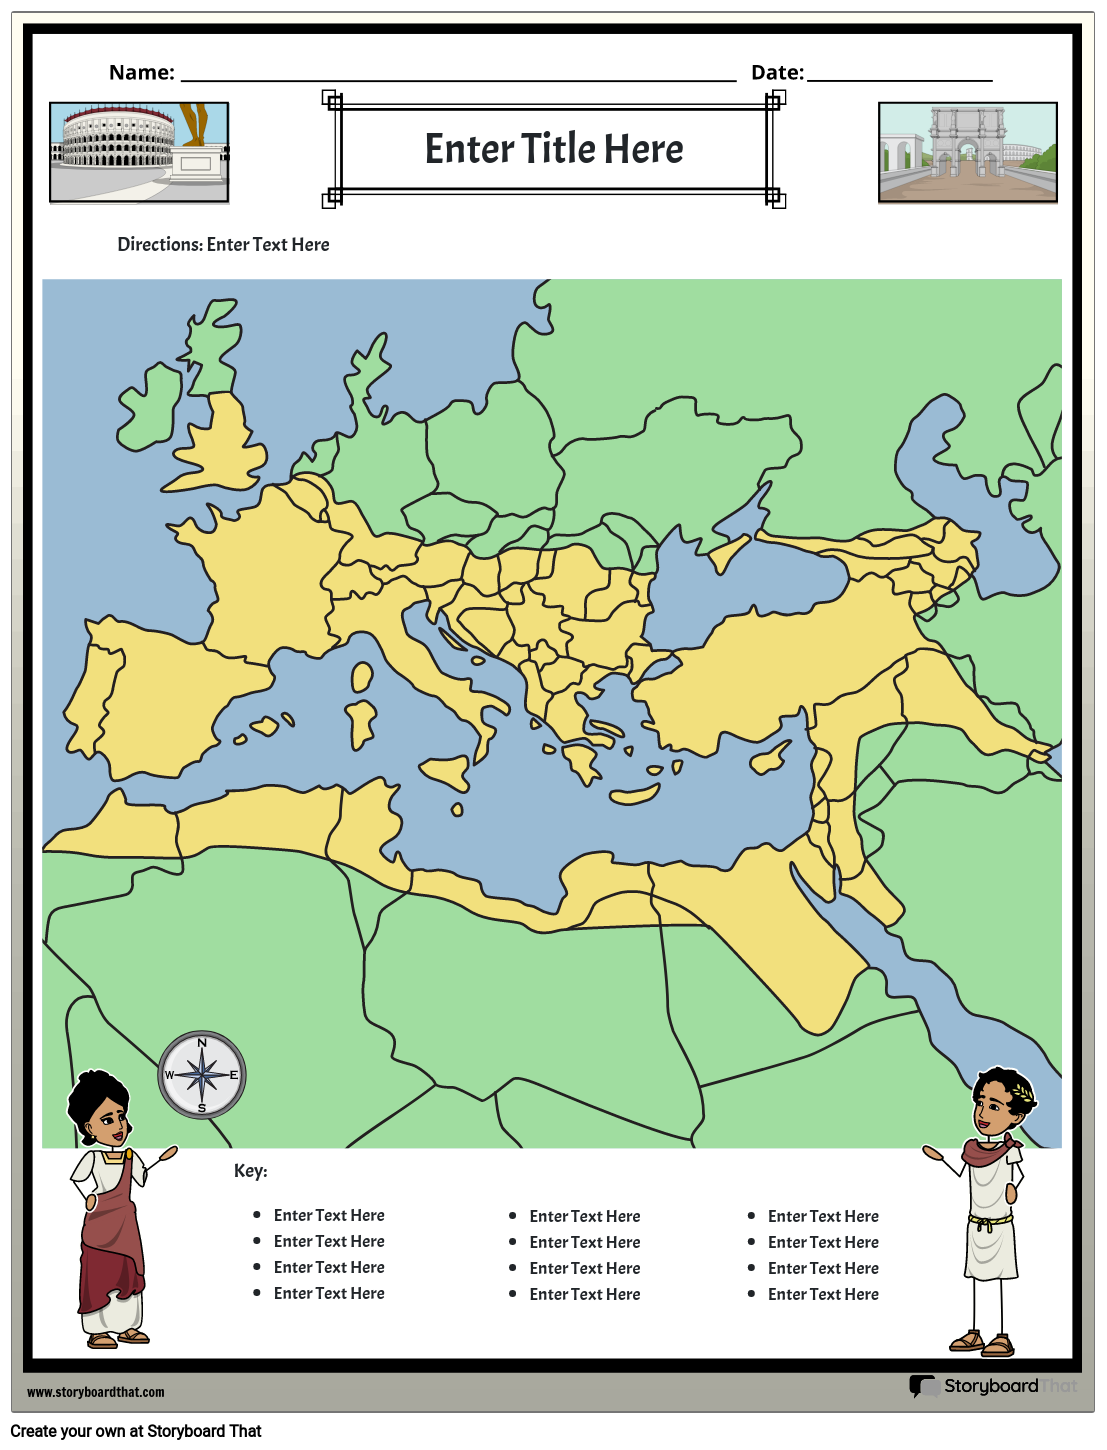 रोमन साम्राज्य का नक्शा